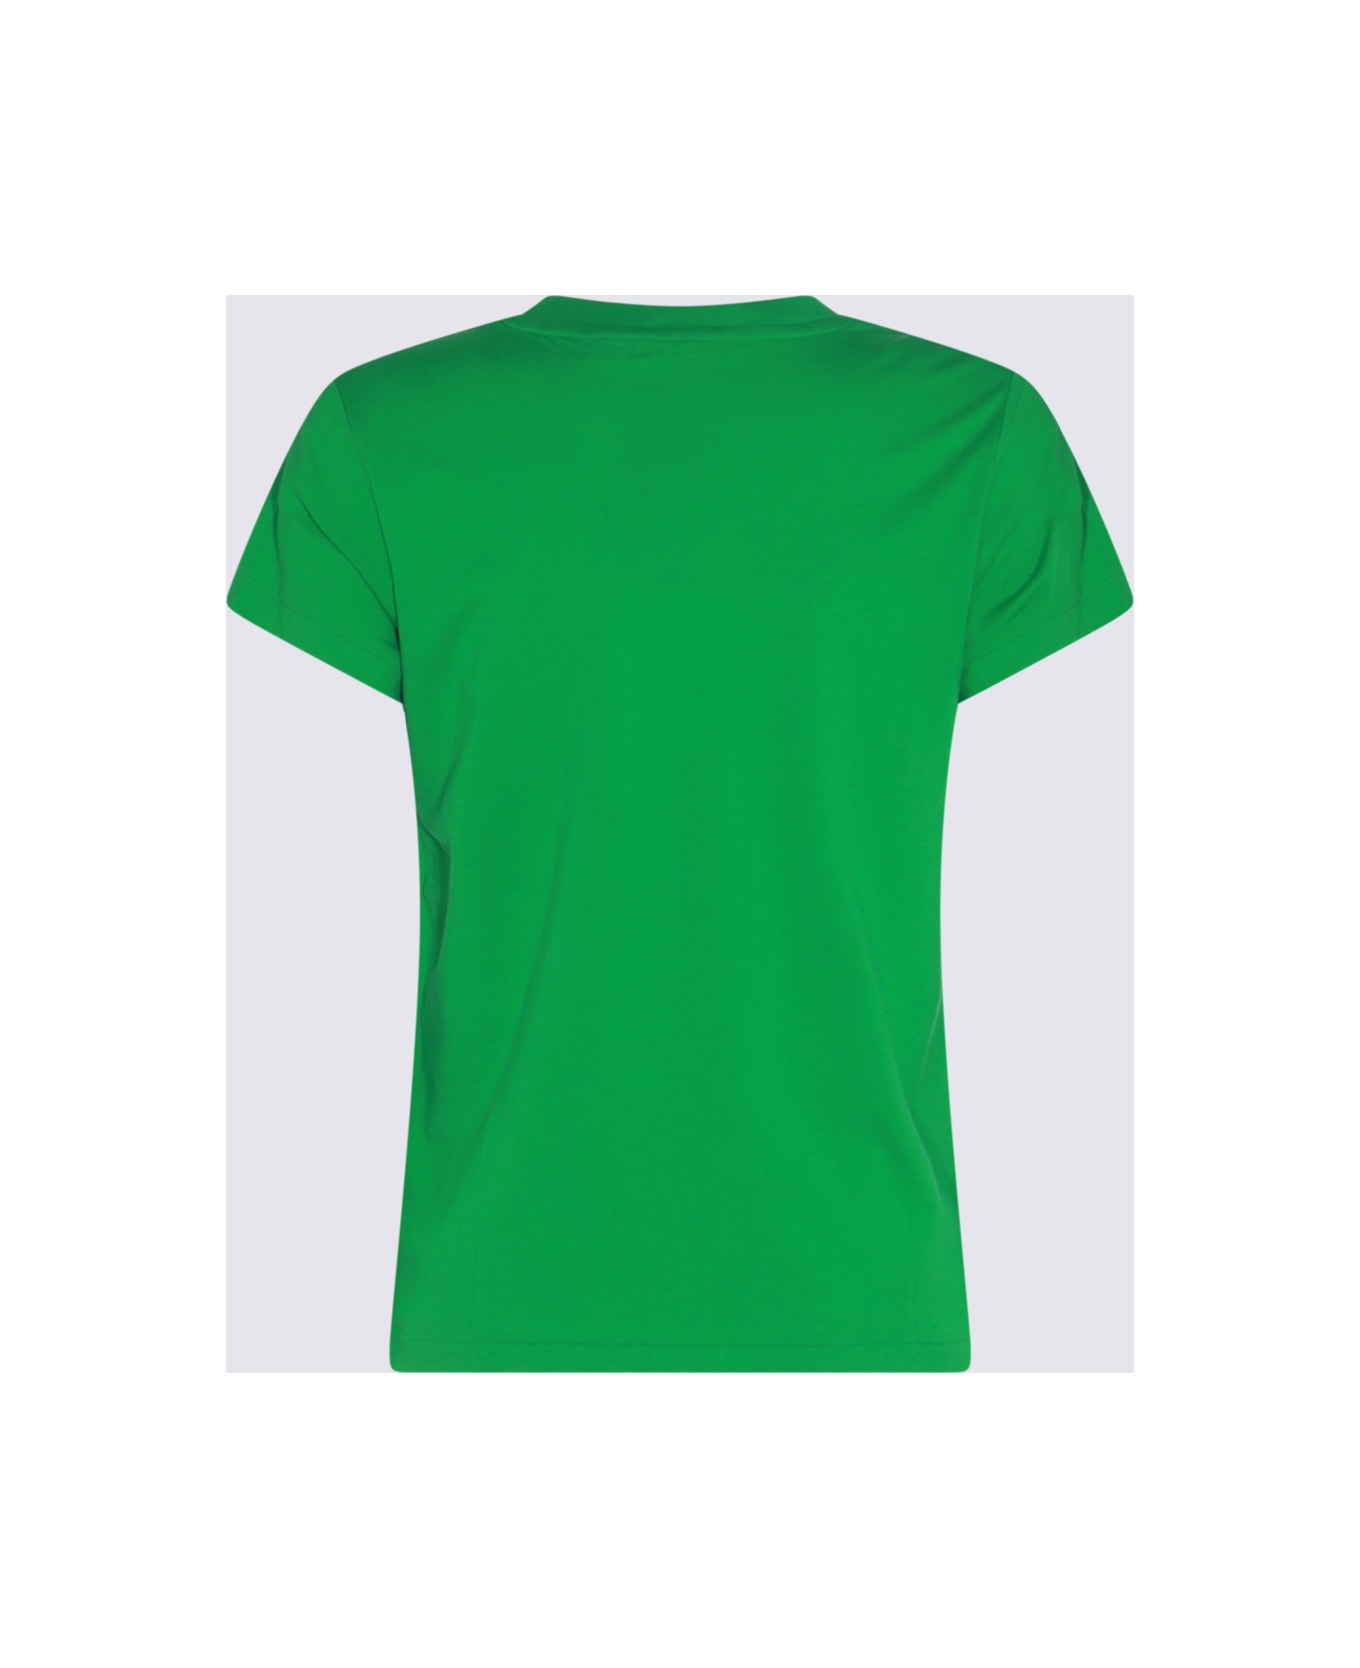 Polo Ralph Lauren Green And Blue Cotton T-shirt - PREPPY GREEN